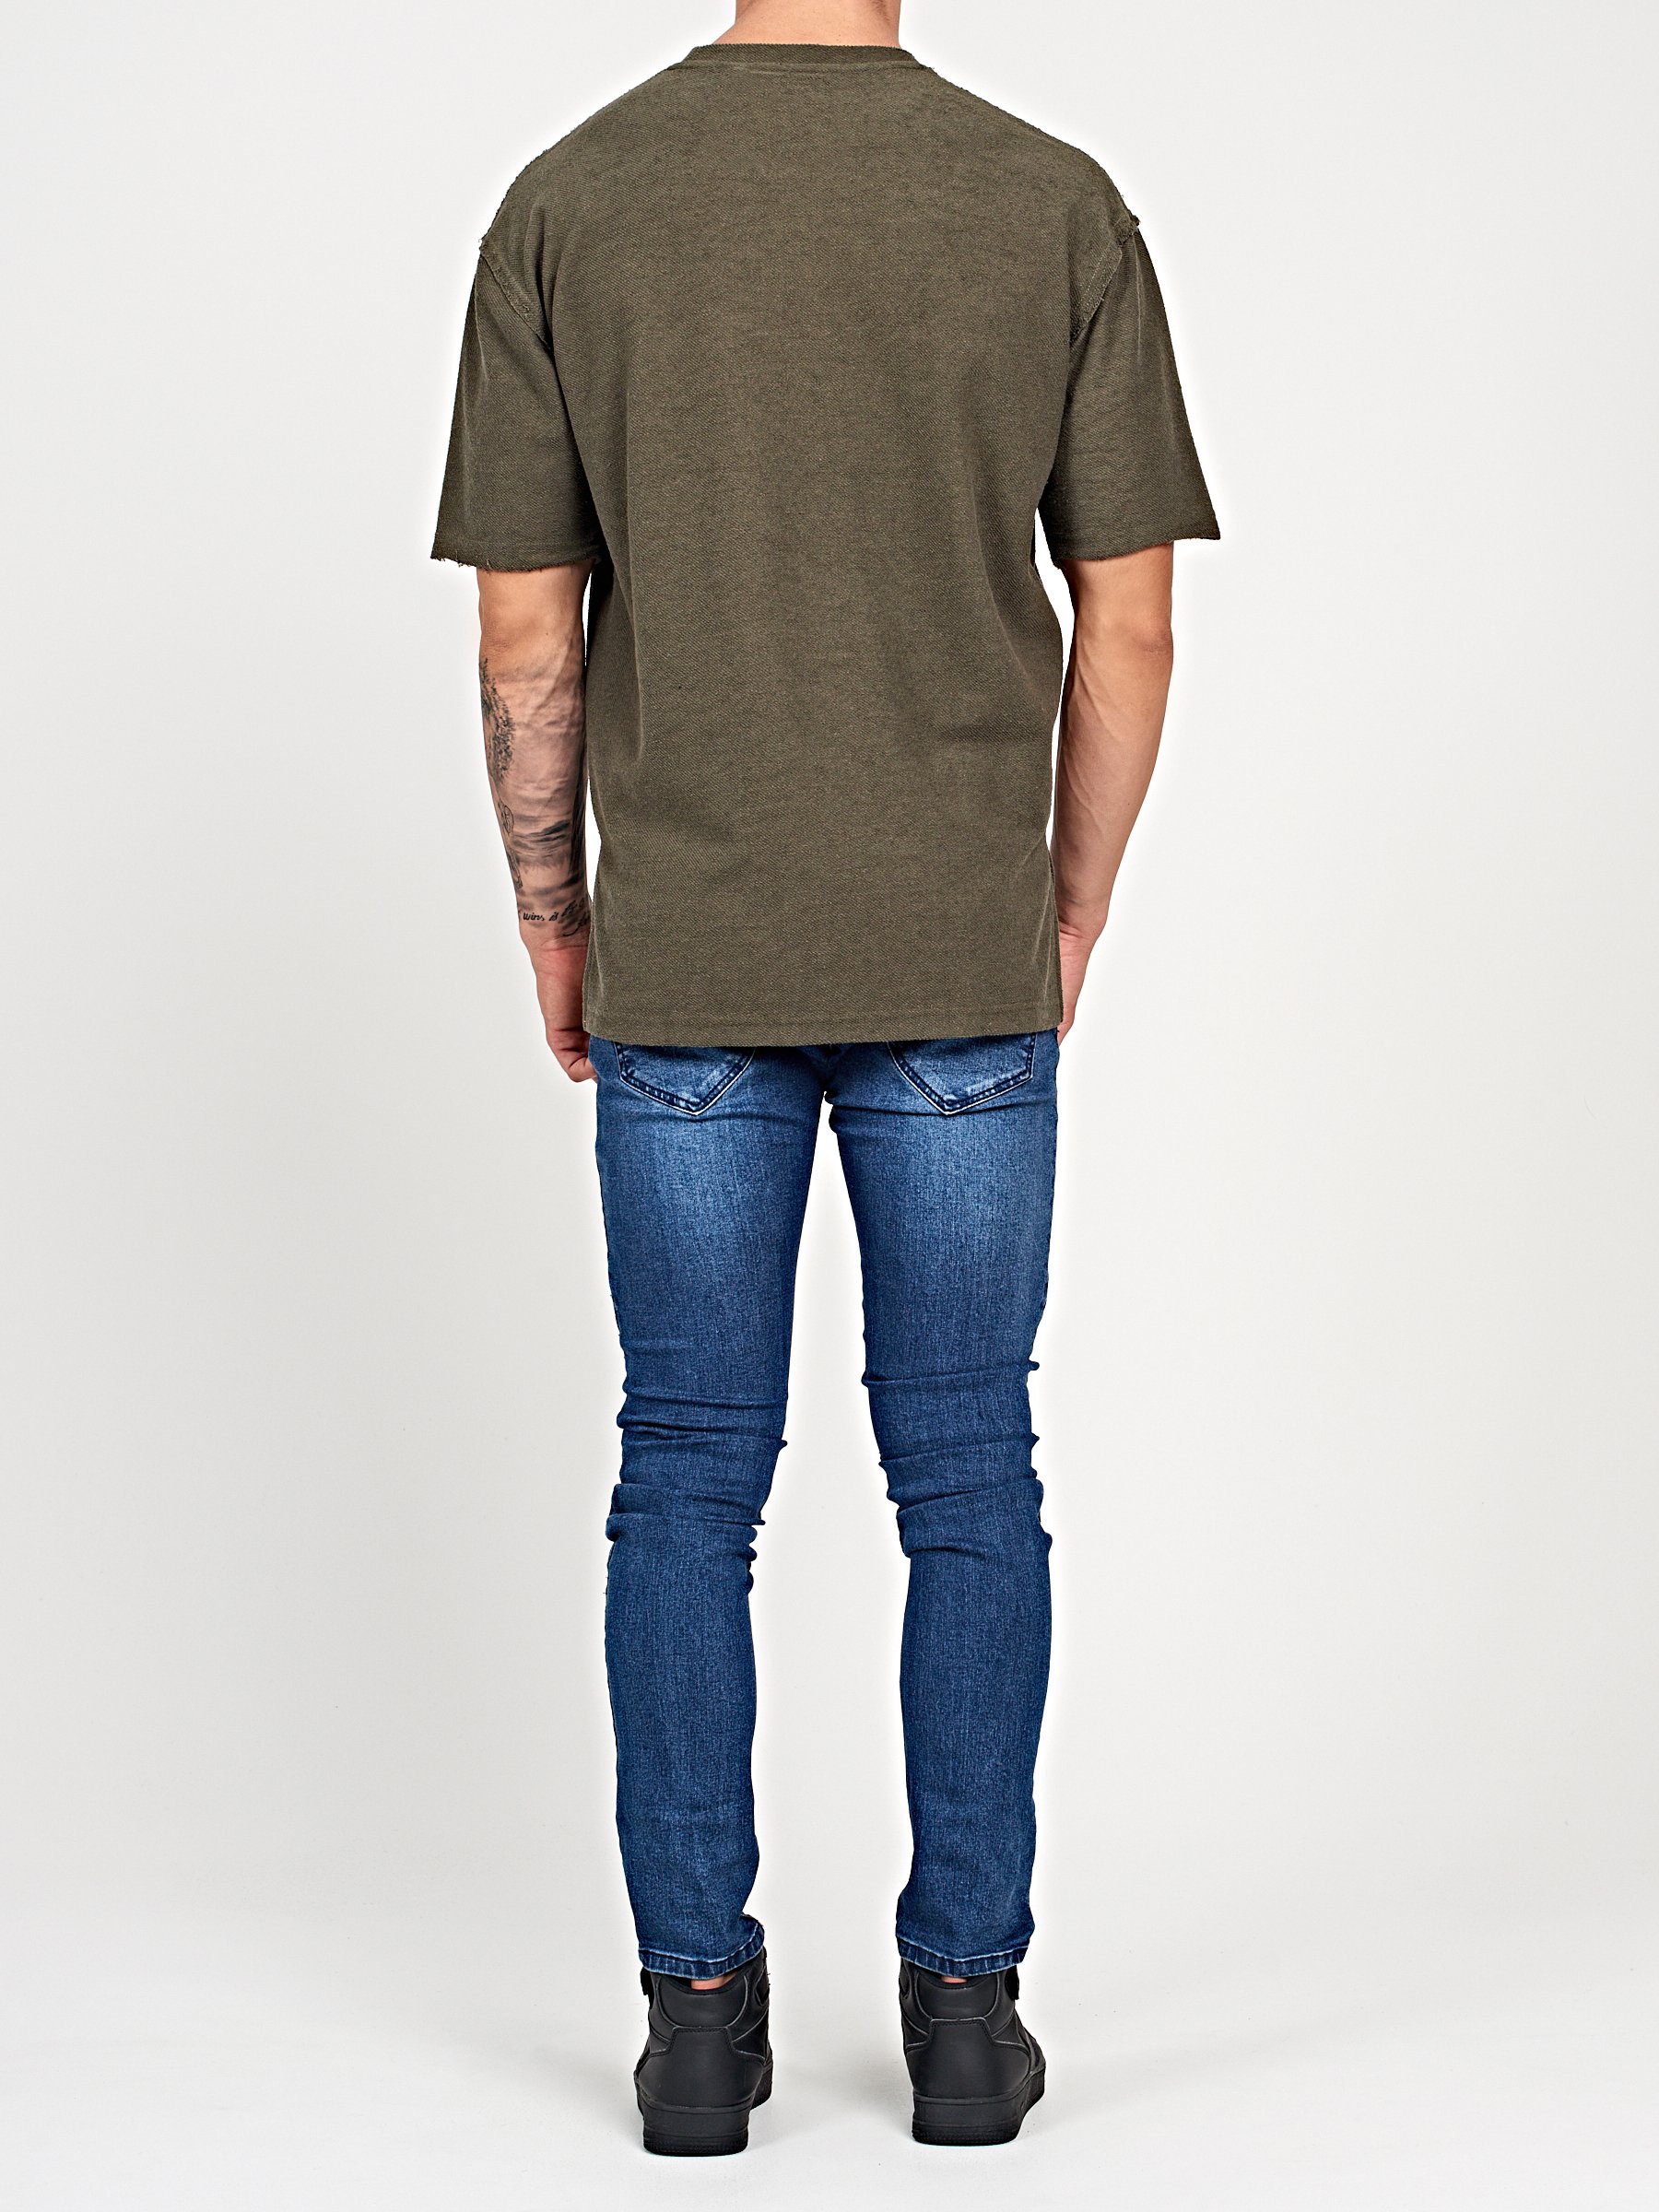 Oversized short sleeve sweatshirt with raw edge